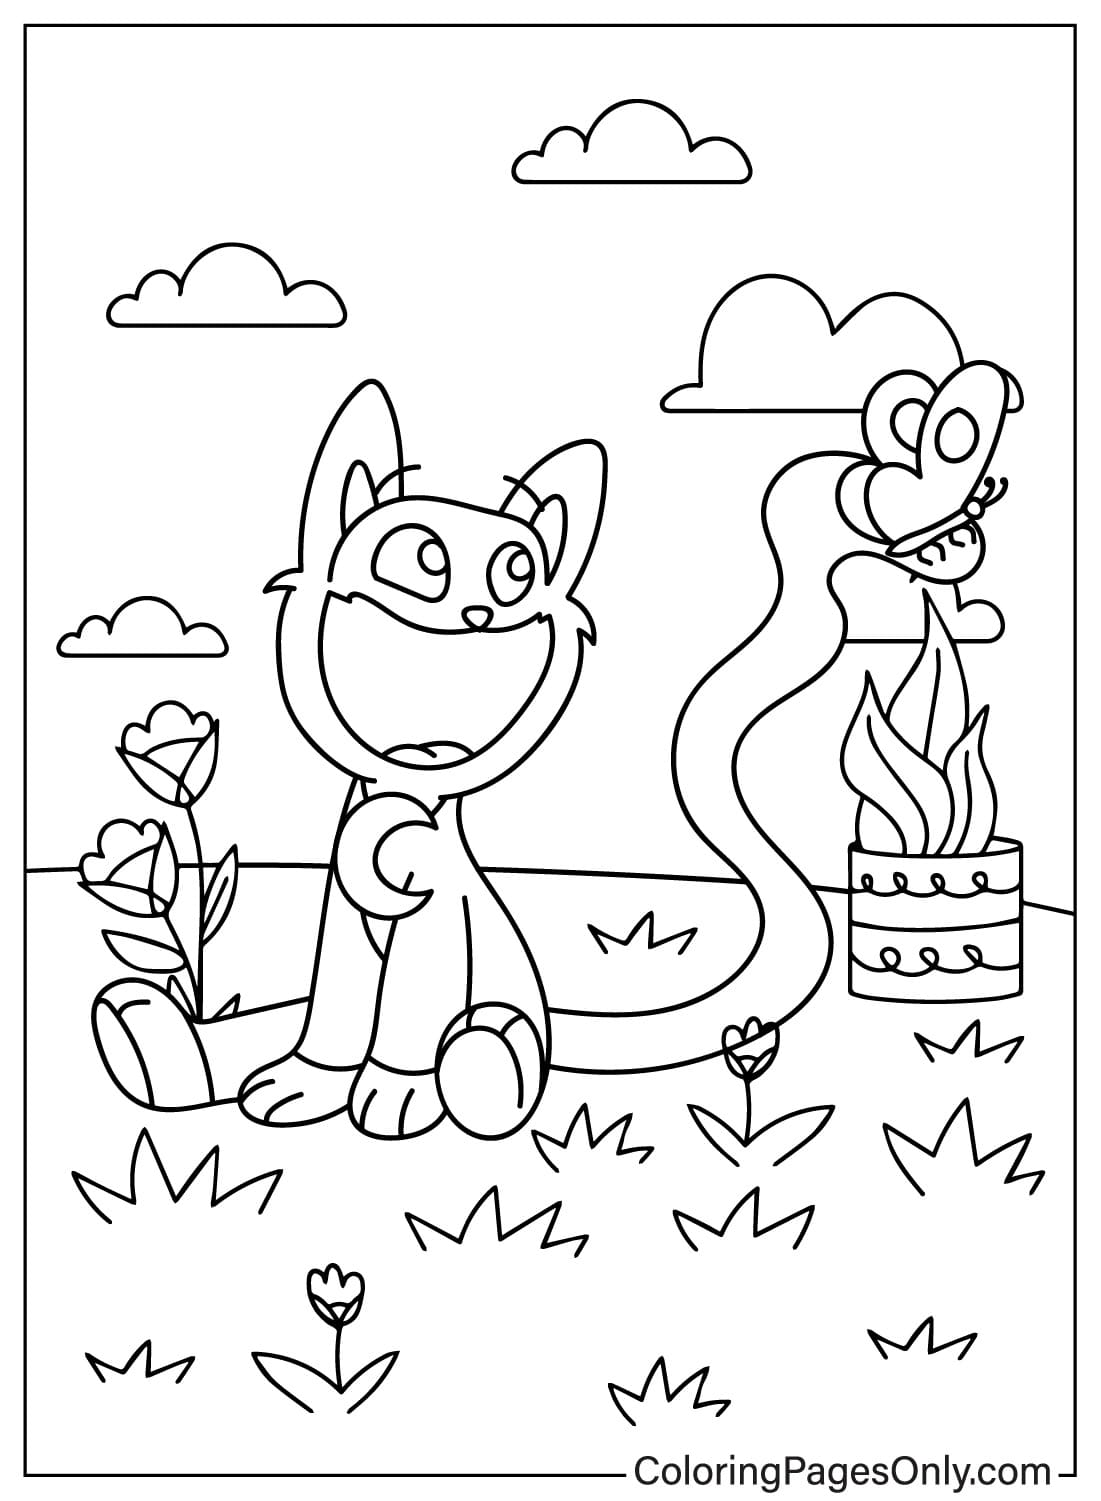 Disegni da colorare CatNap per bambini da CatNap